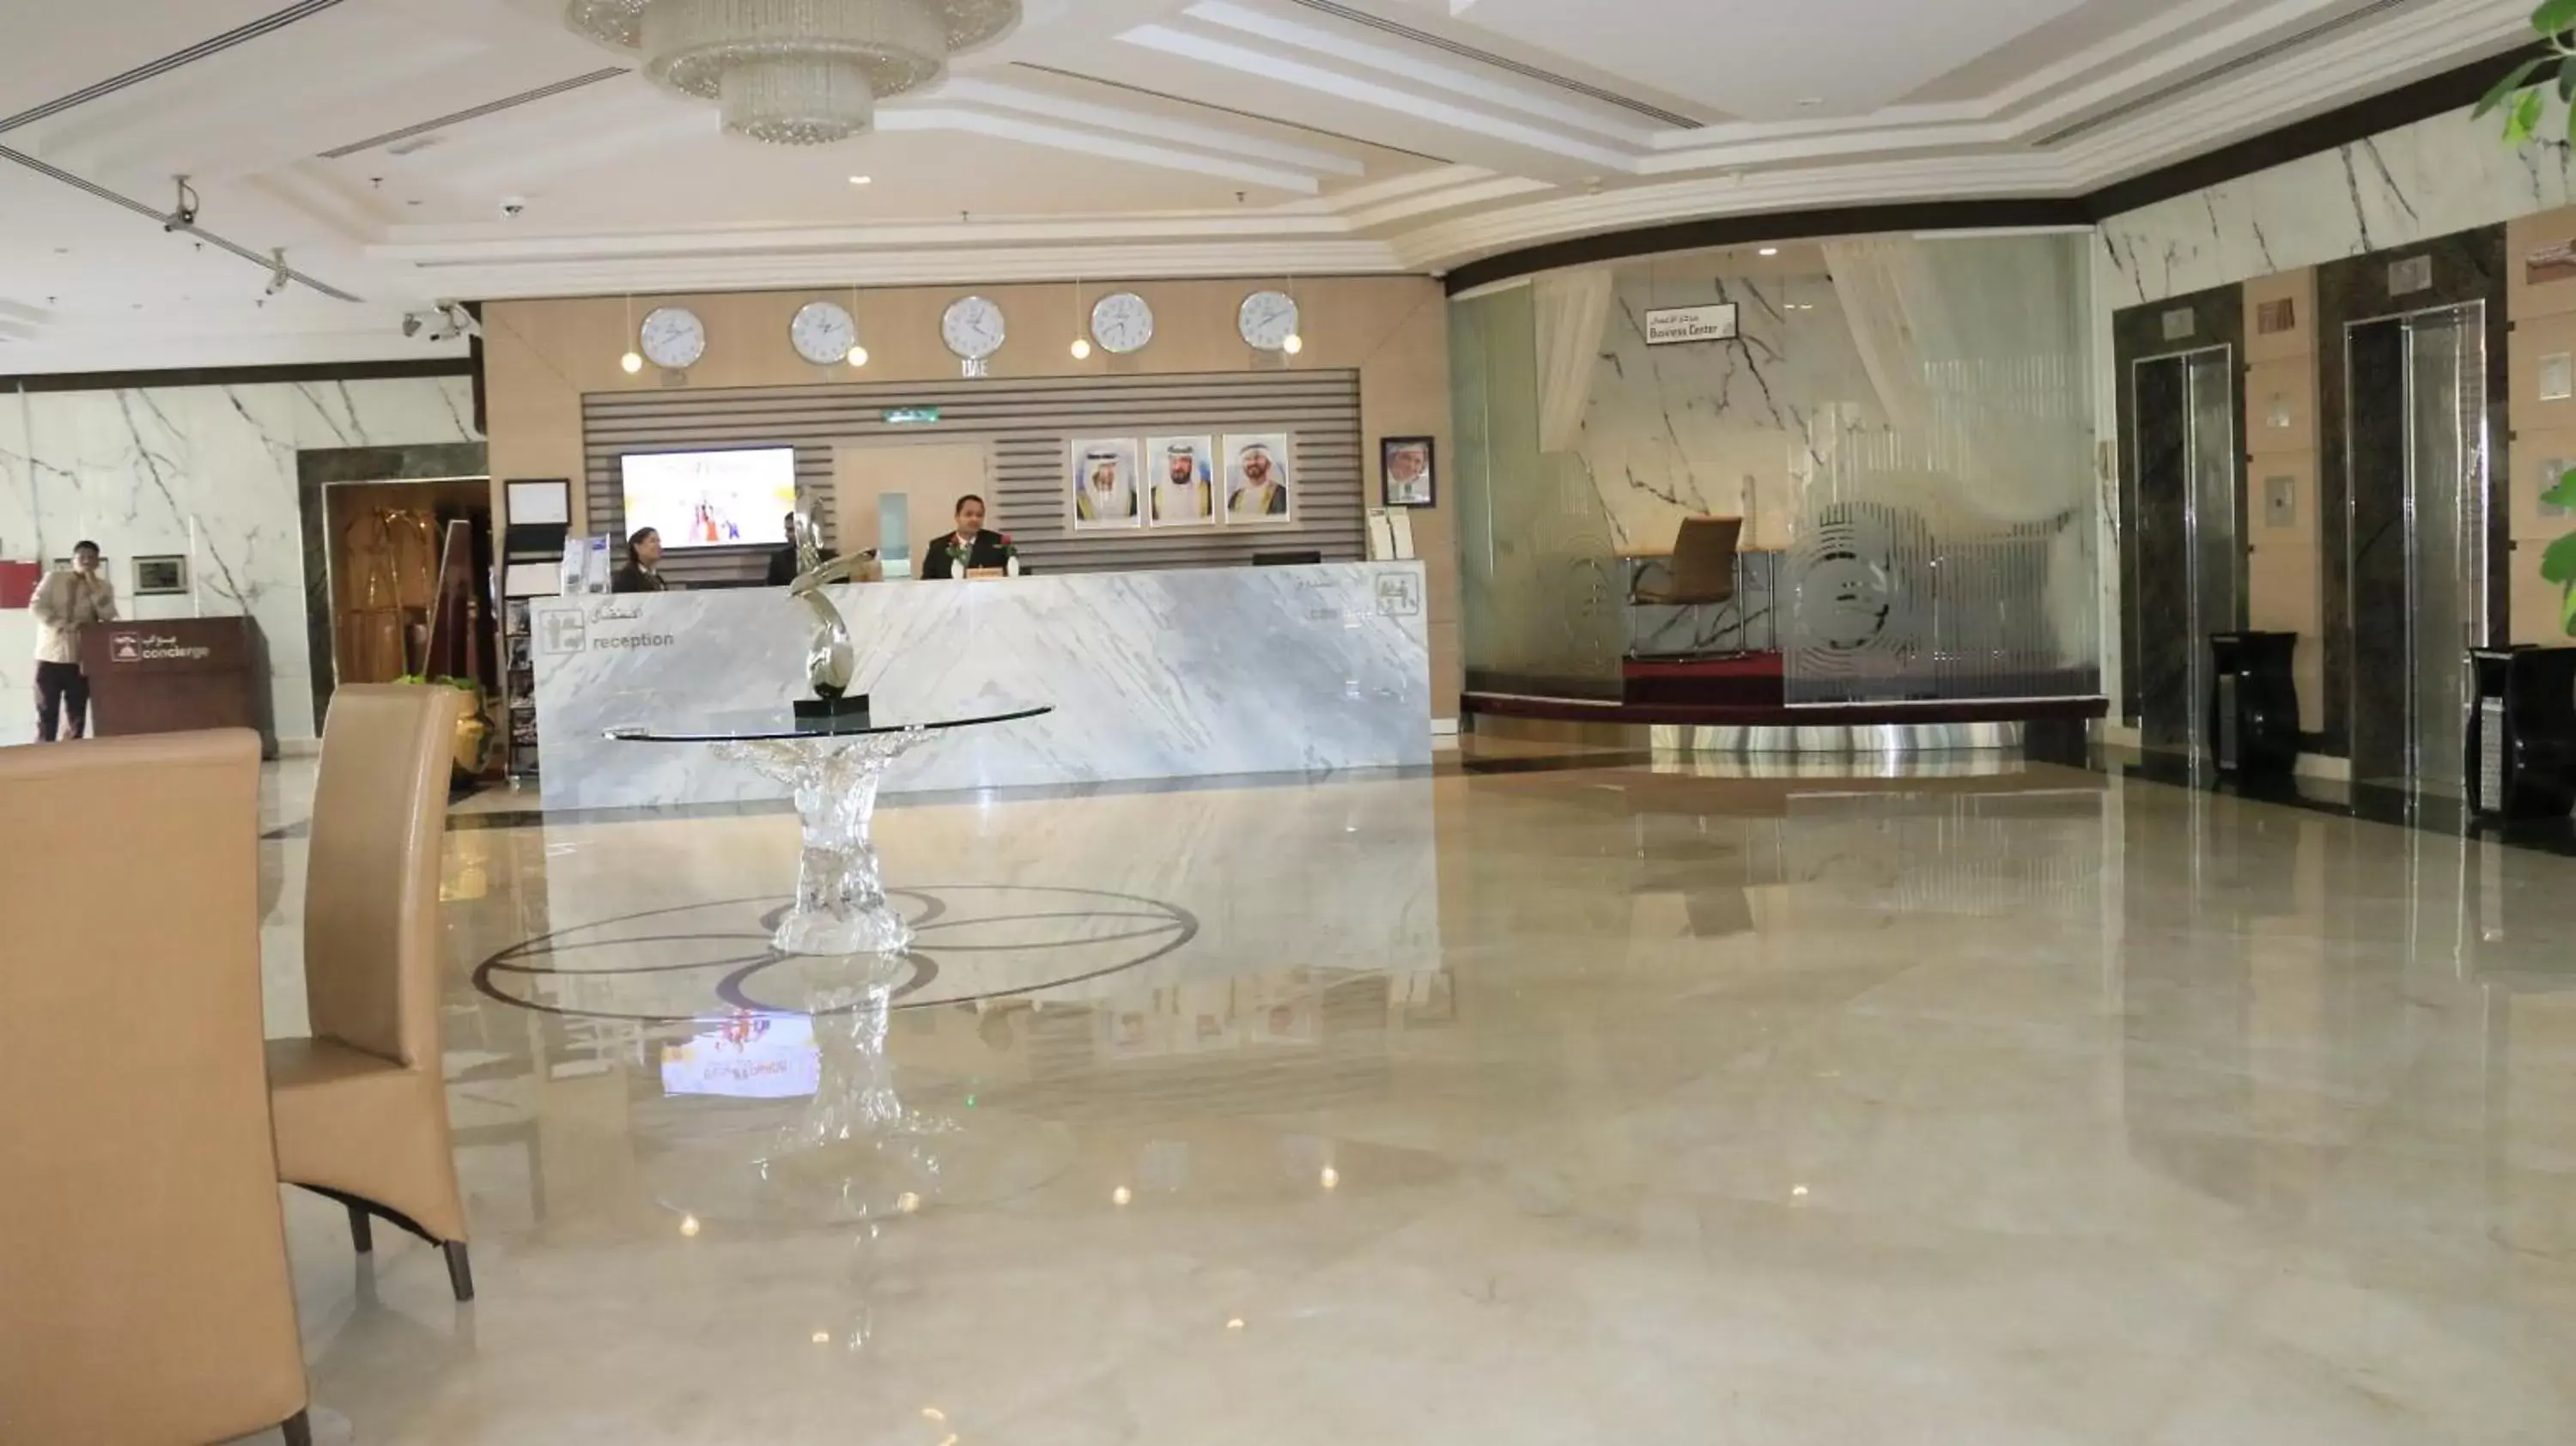 Lobby or reception in Dubai Grand Hotel by Fortune, Dubai Airport